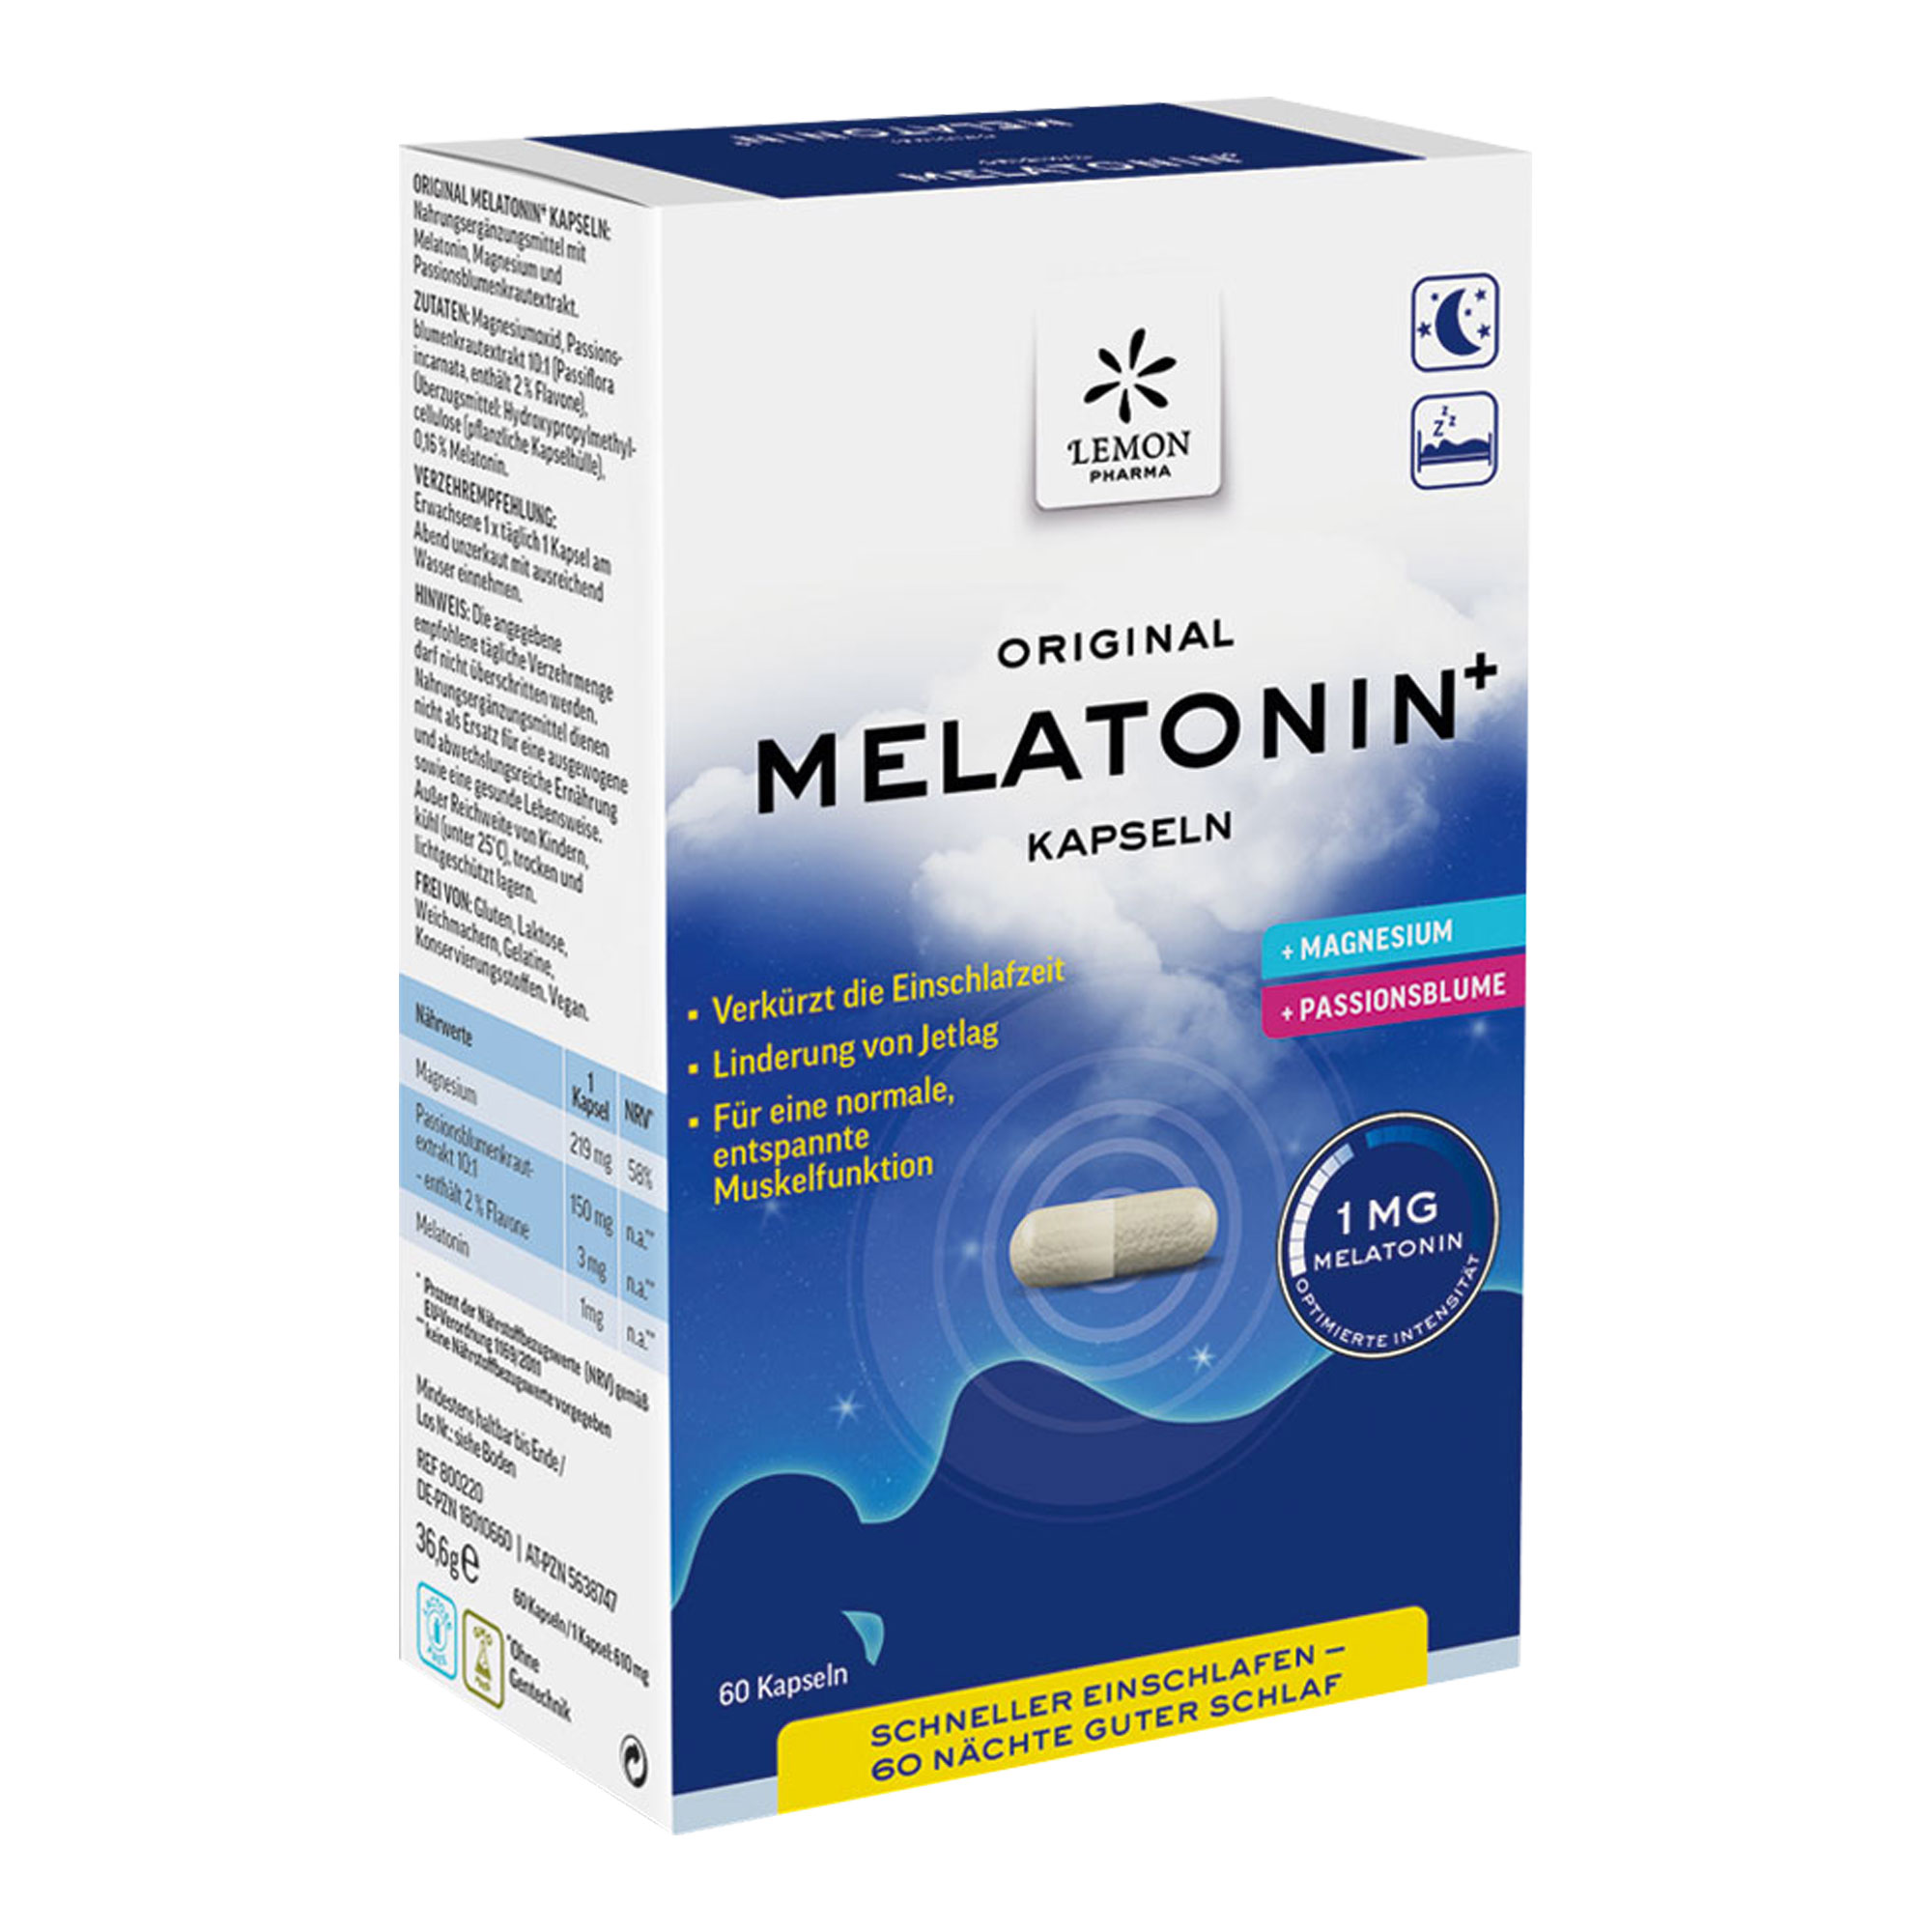 Nahrungsergänzungsmittel mit Magnesium, Passionsblumenkrautextrakt und Melatonin.